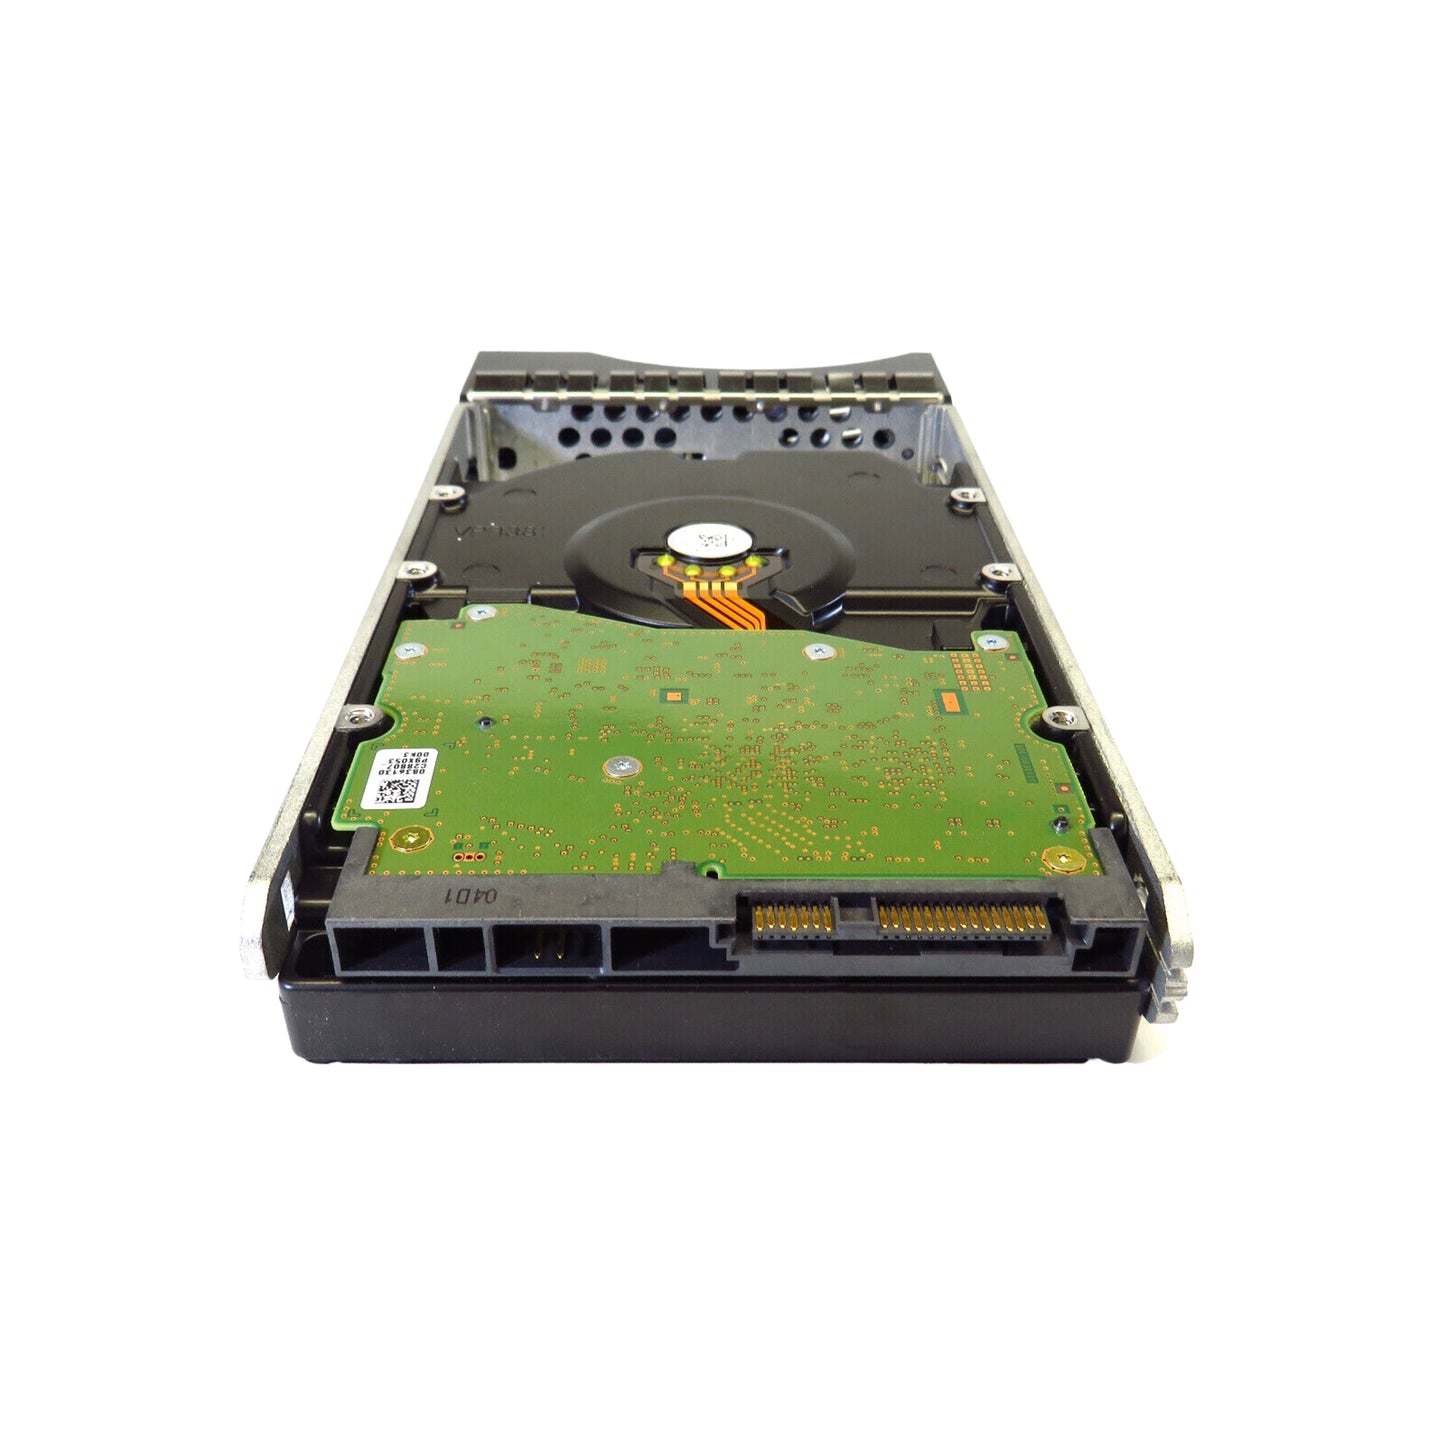 IBM 02PX586 3.5" 8TB 7200RPM SAS 12Gb/s Hard Disk Drive (HDD), Silver (Refurbished)